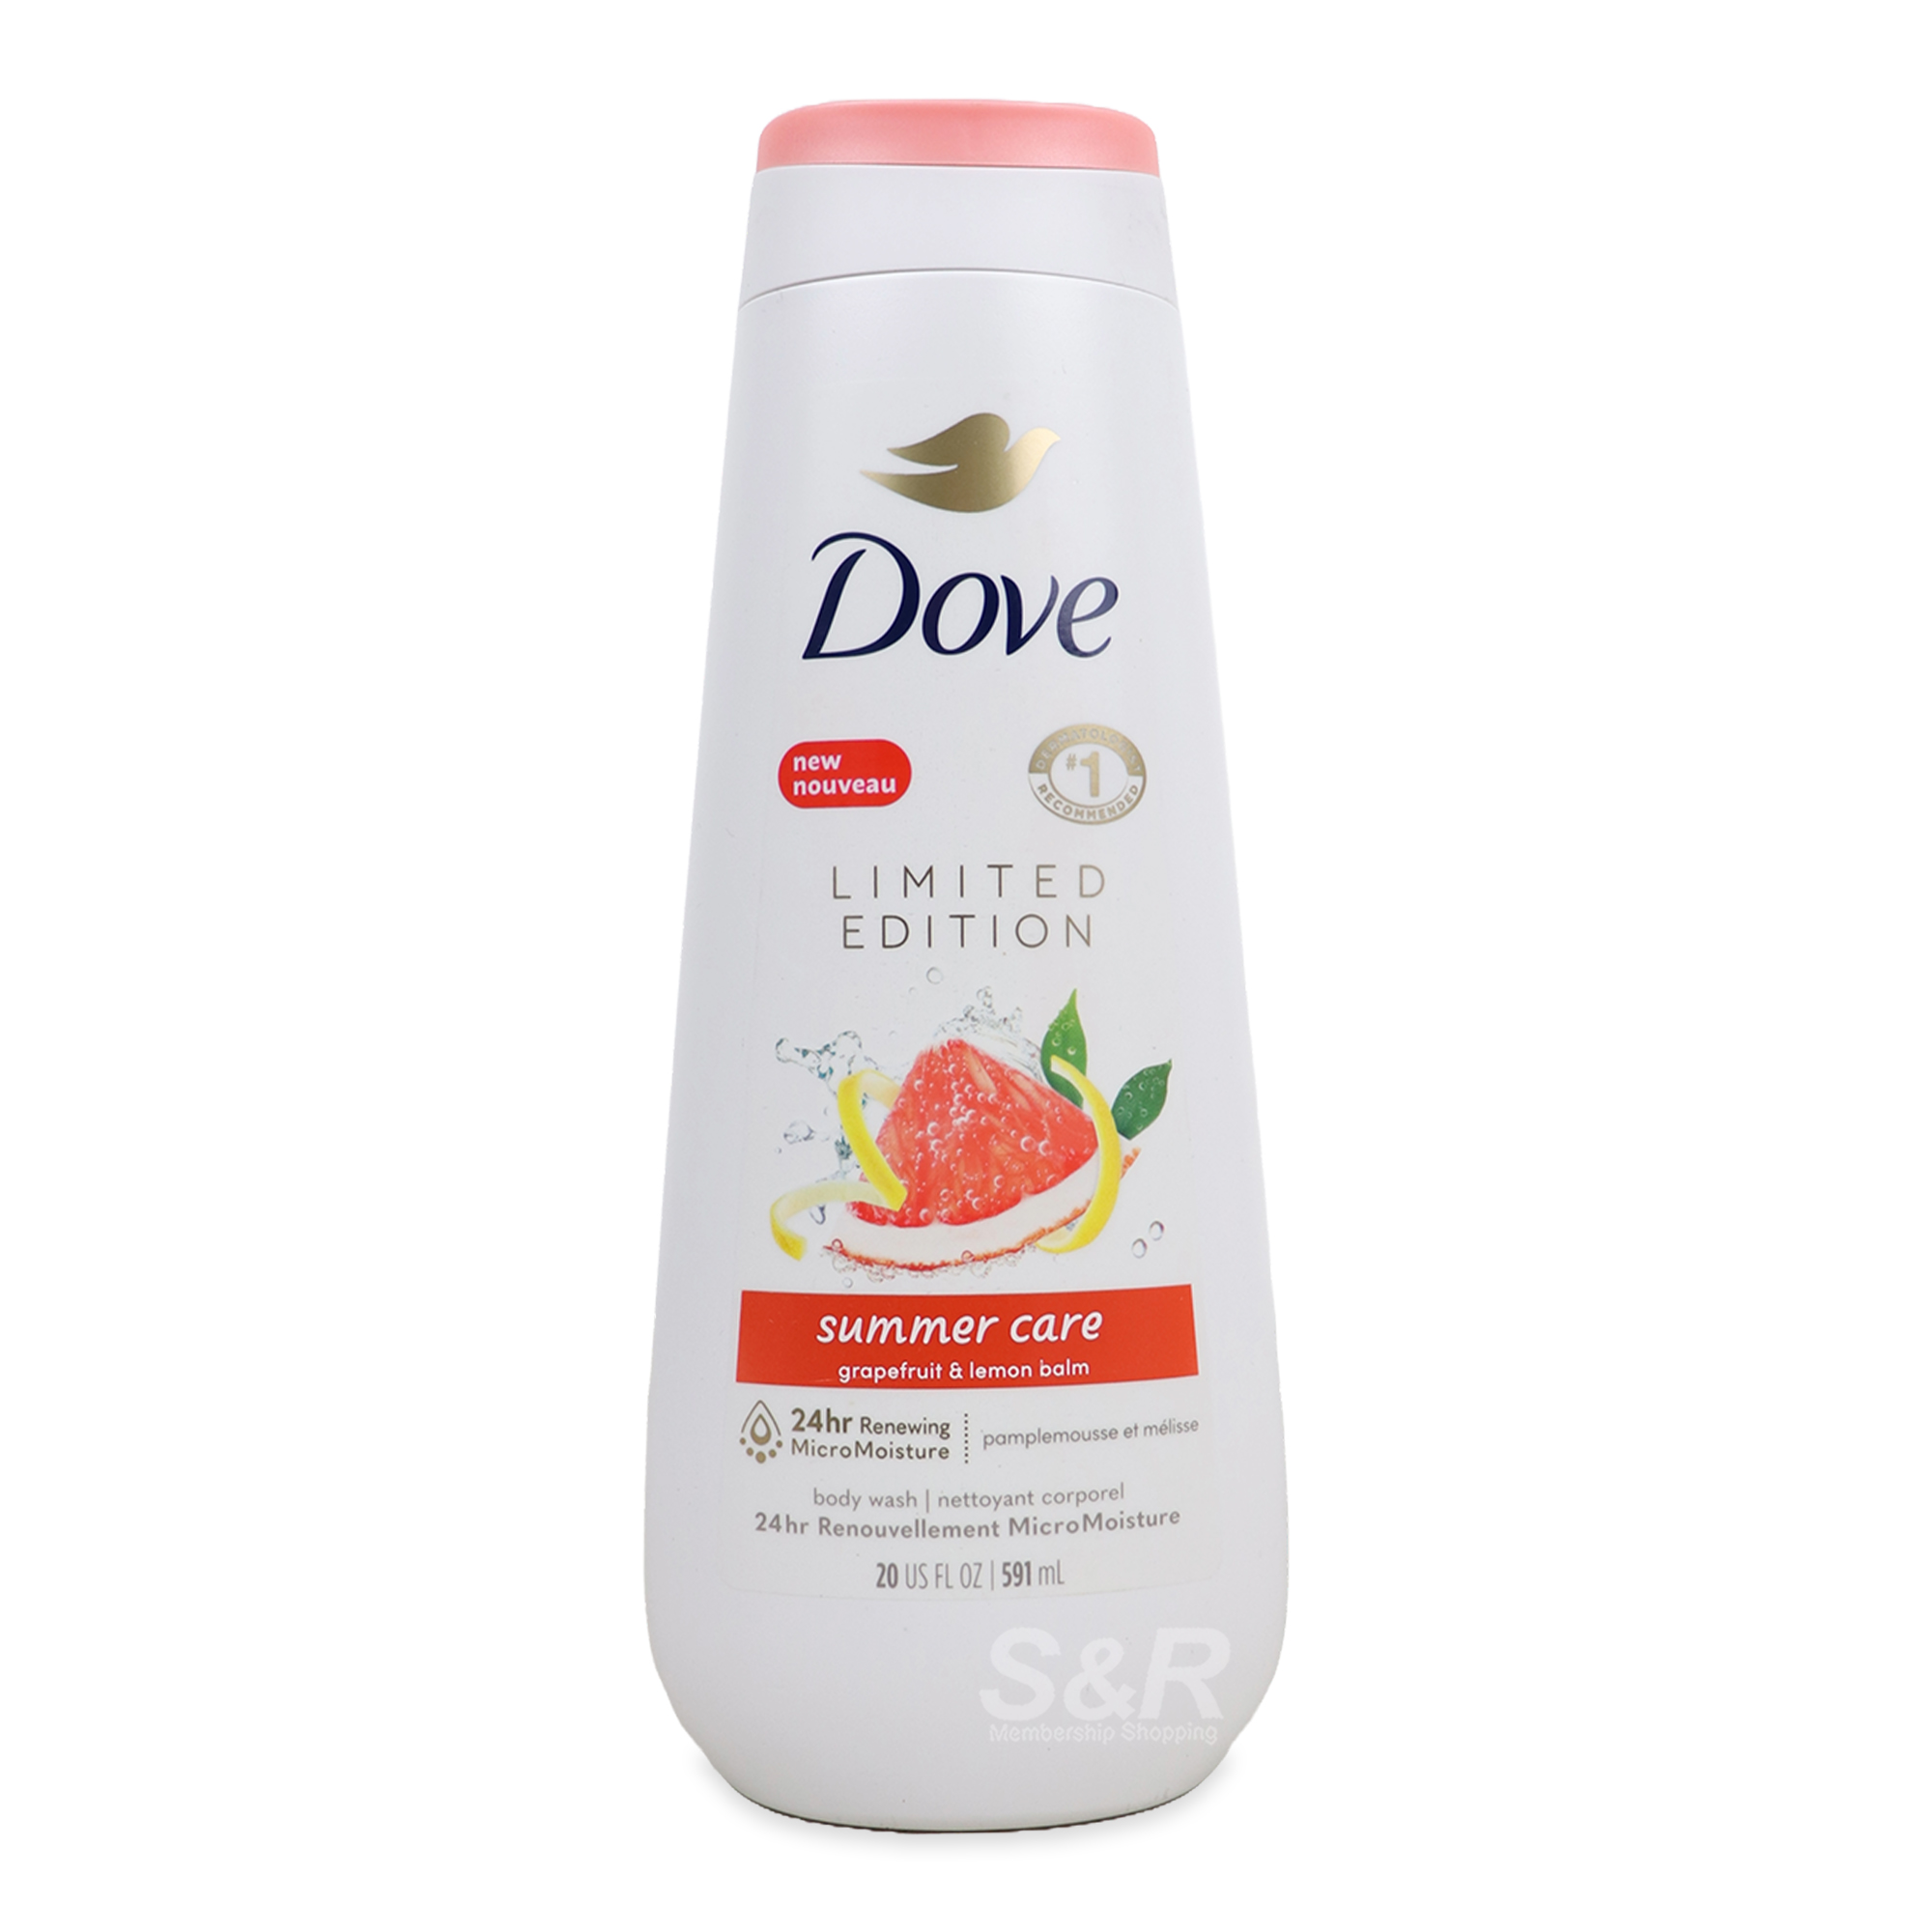 Dove Grapefruit and Lemon Balm Body Wash 591mL